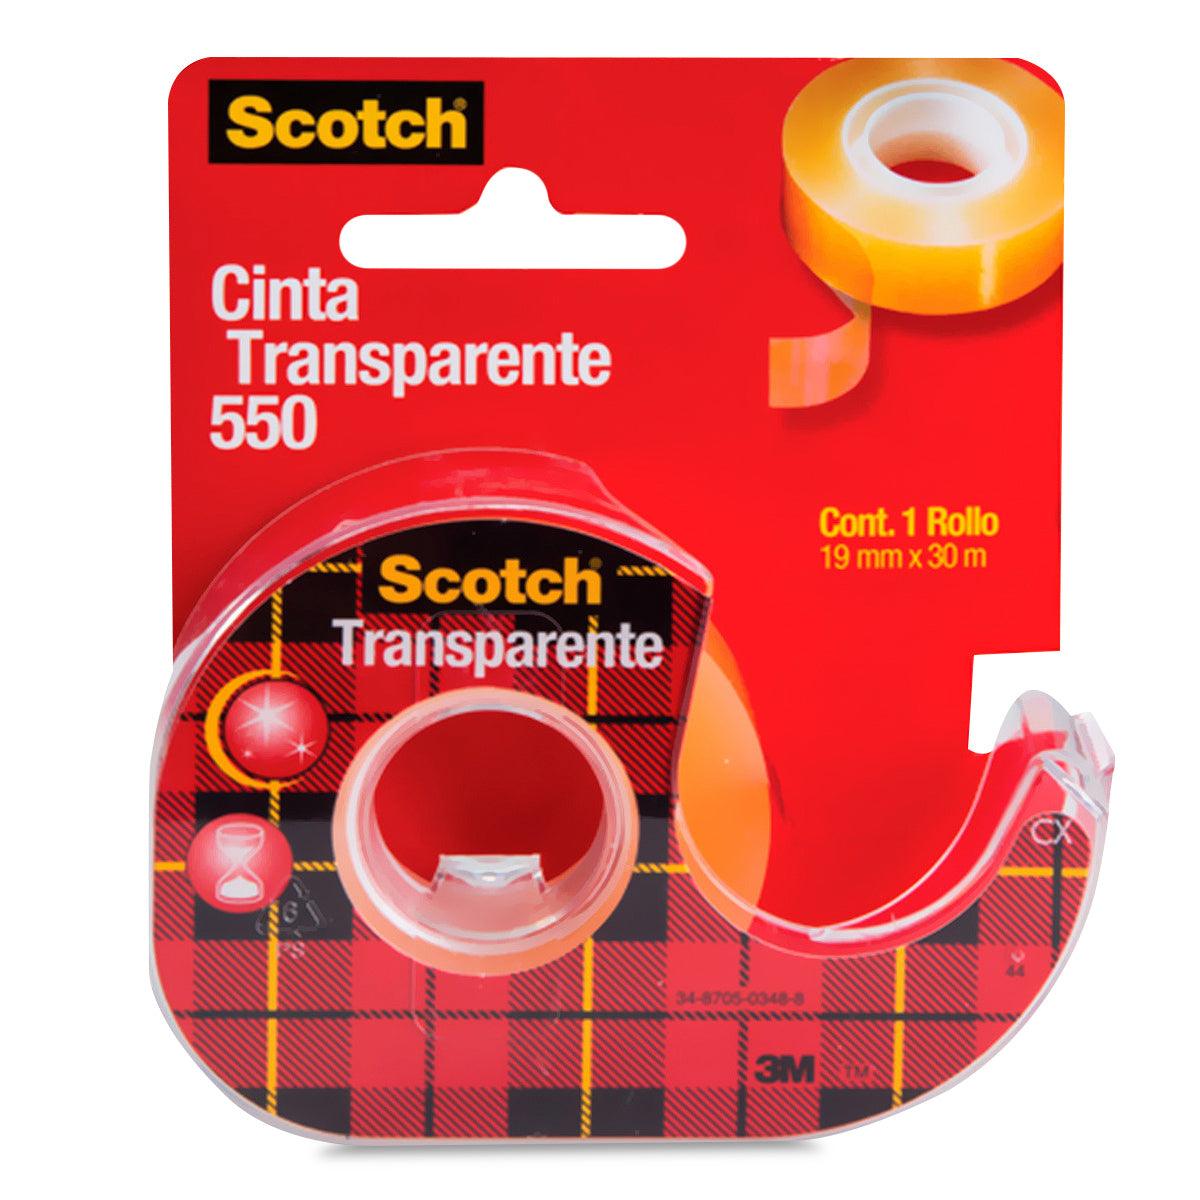 Cinta transparente Scotch 19X30 con despachador - Colmenero Shop